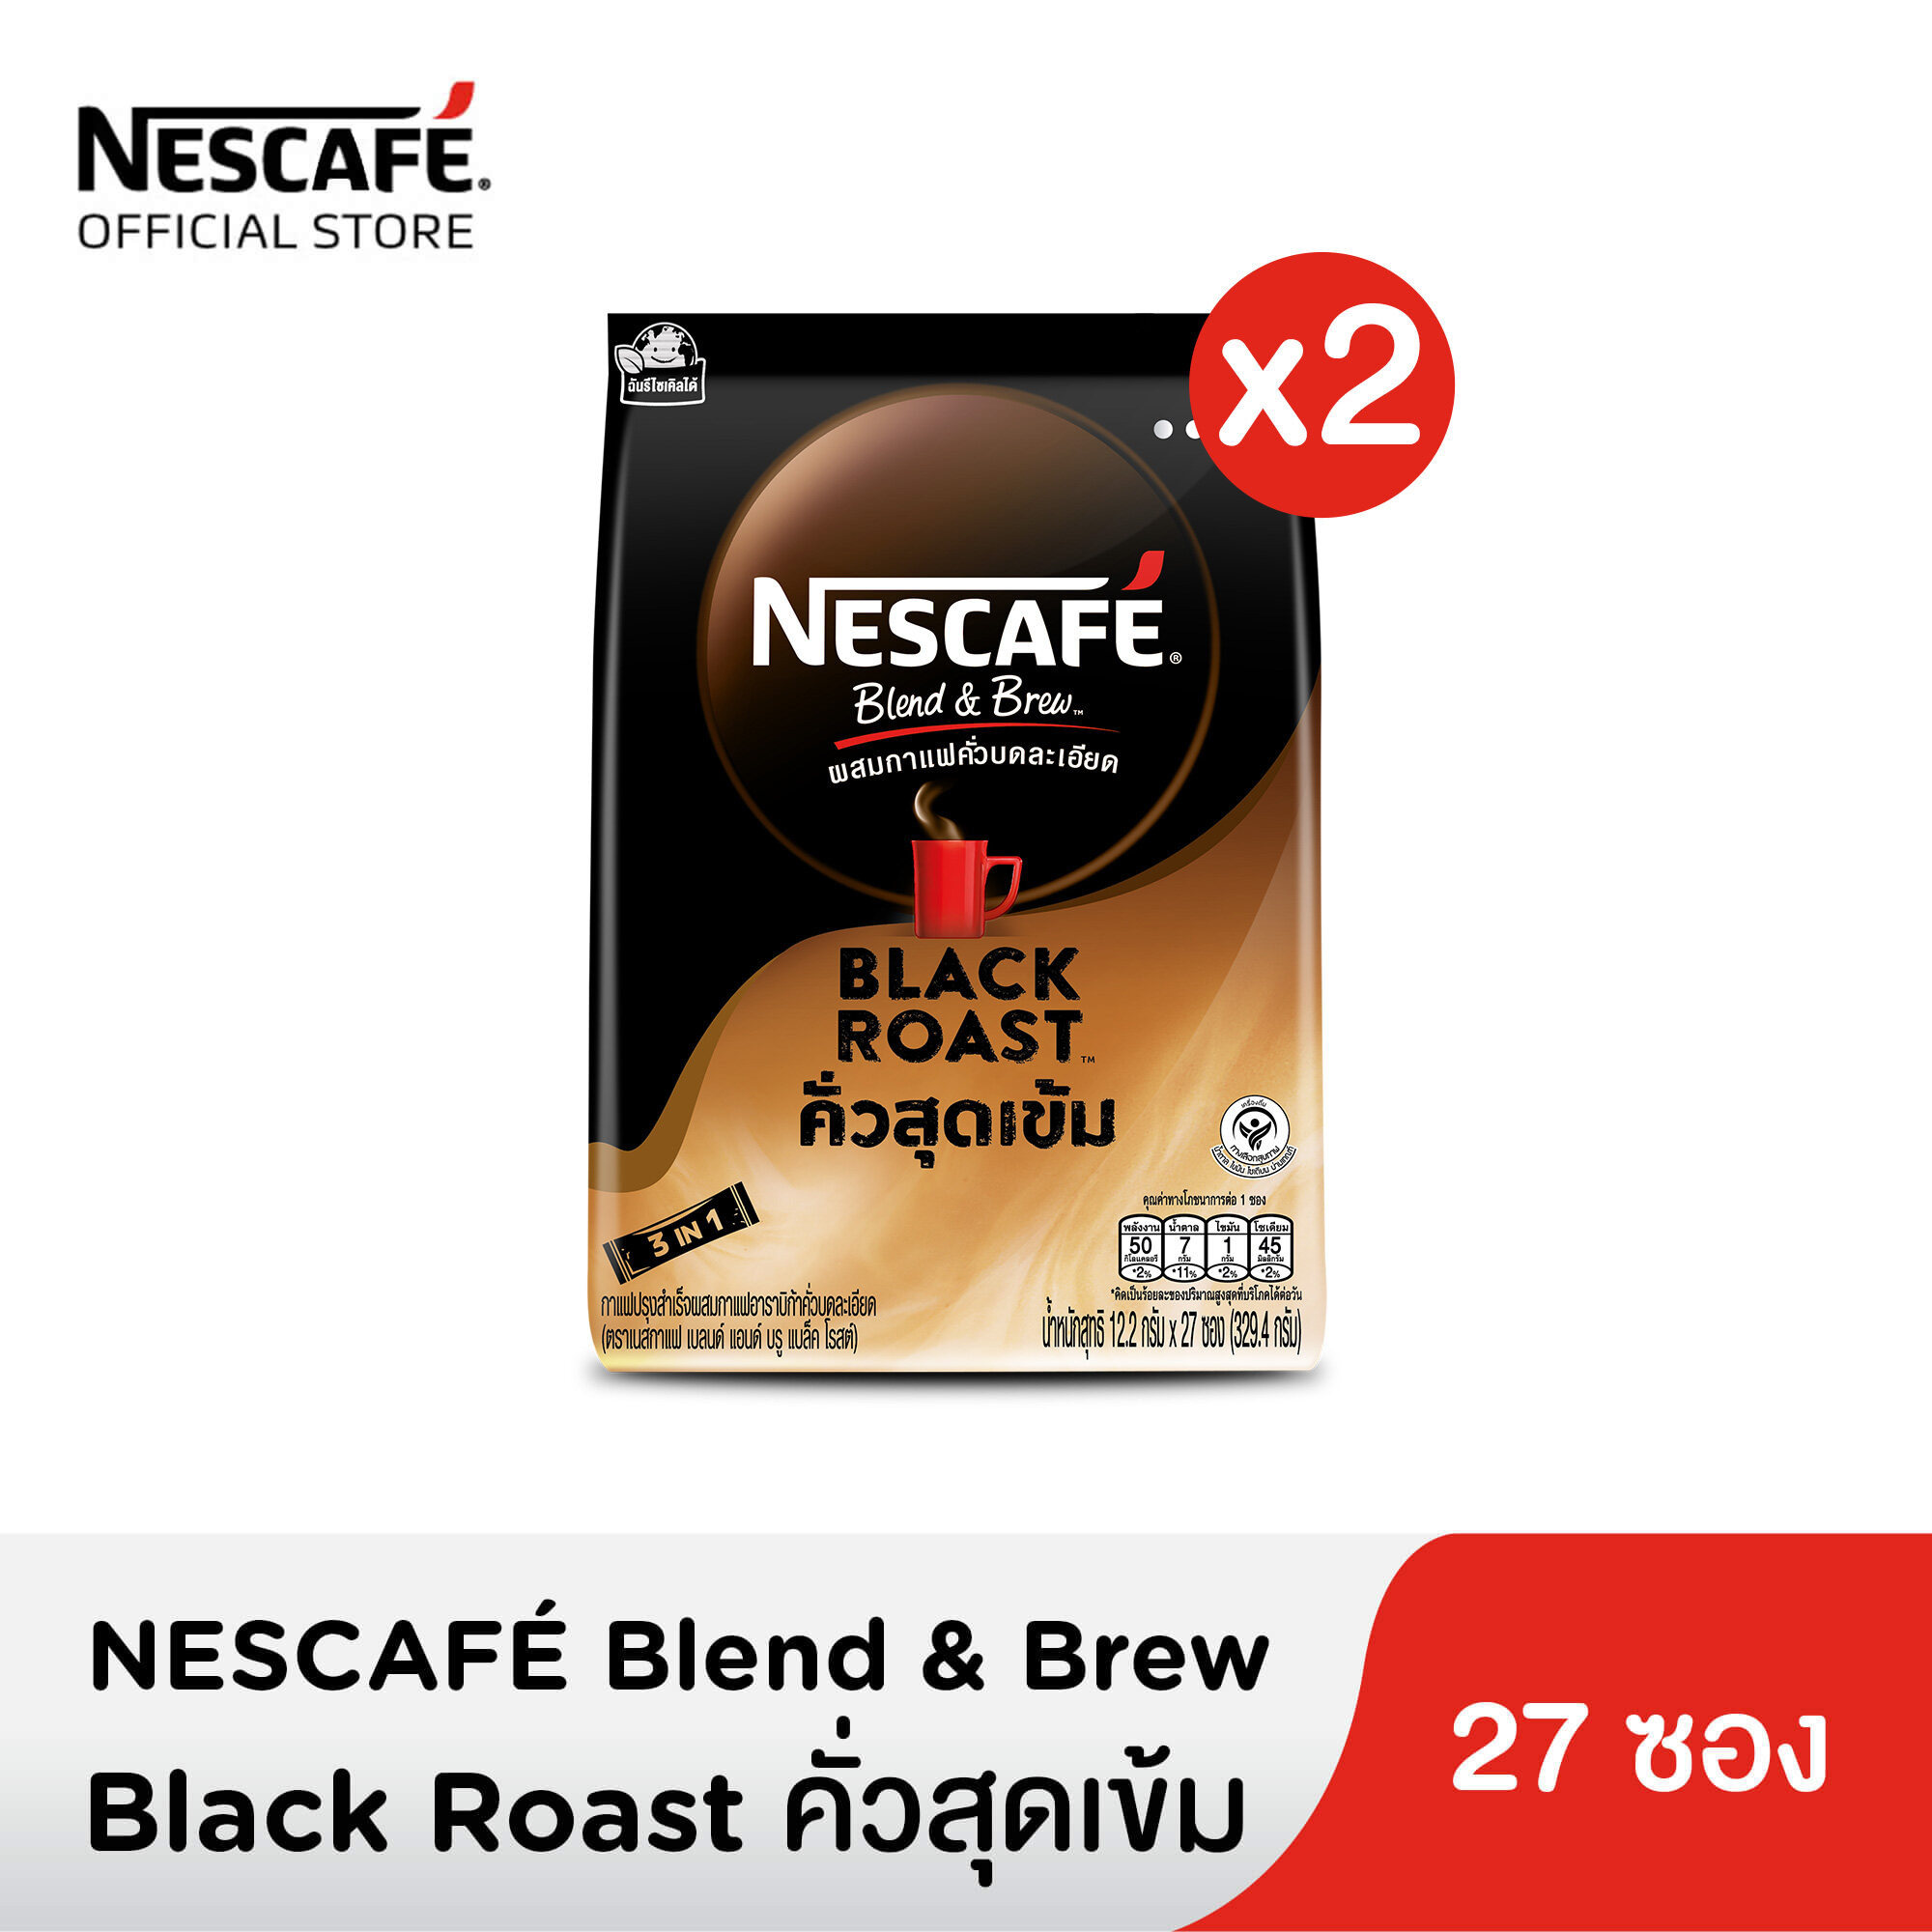 NESCAFÉ Blend & Brew Black Roast เนสกาแฟ เบลนด์ แอนด์ บรู กาแฟปรุงสำเร็จ แบล็ค โรสต์ แบบถุง 27 ซอง (แพ็ค 2 ถุง) [ NESCAFE ]